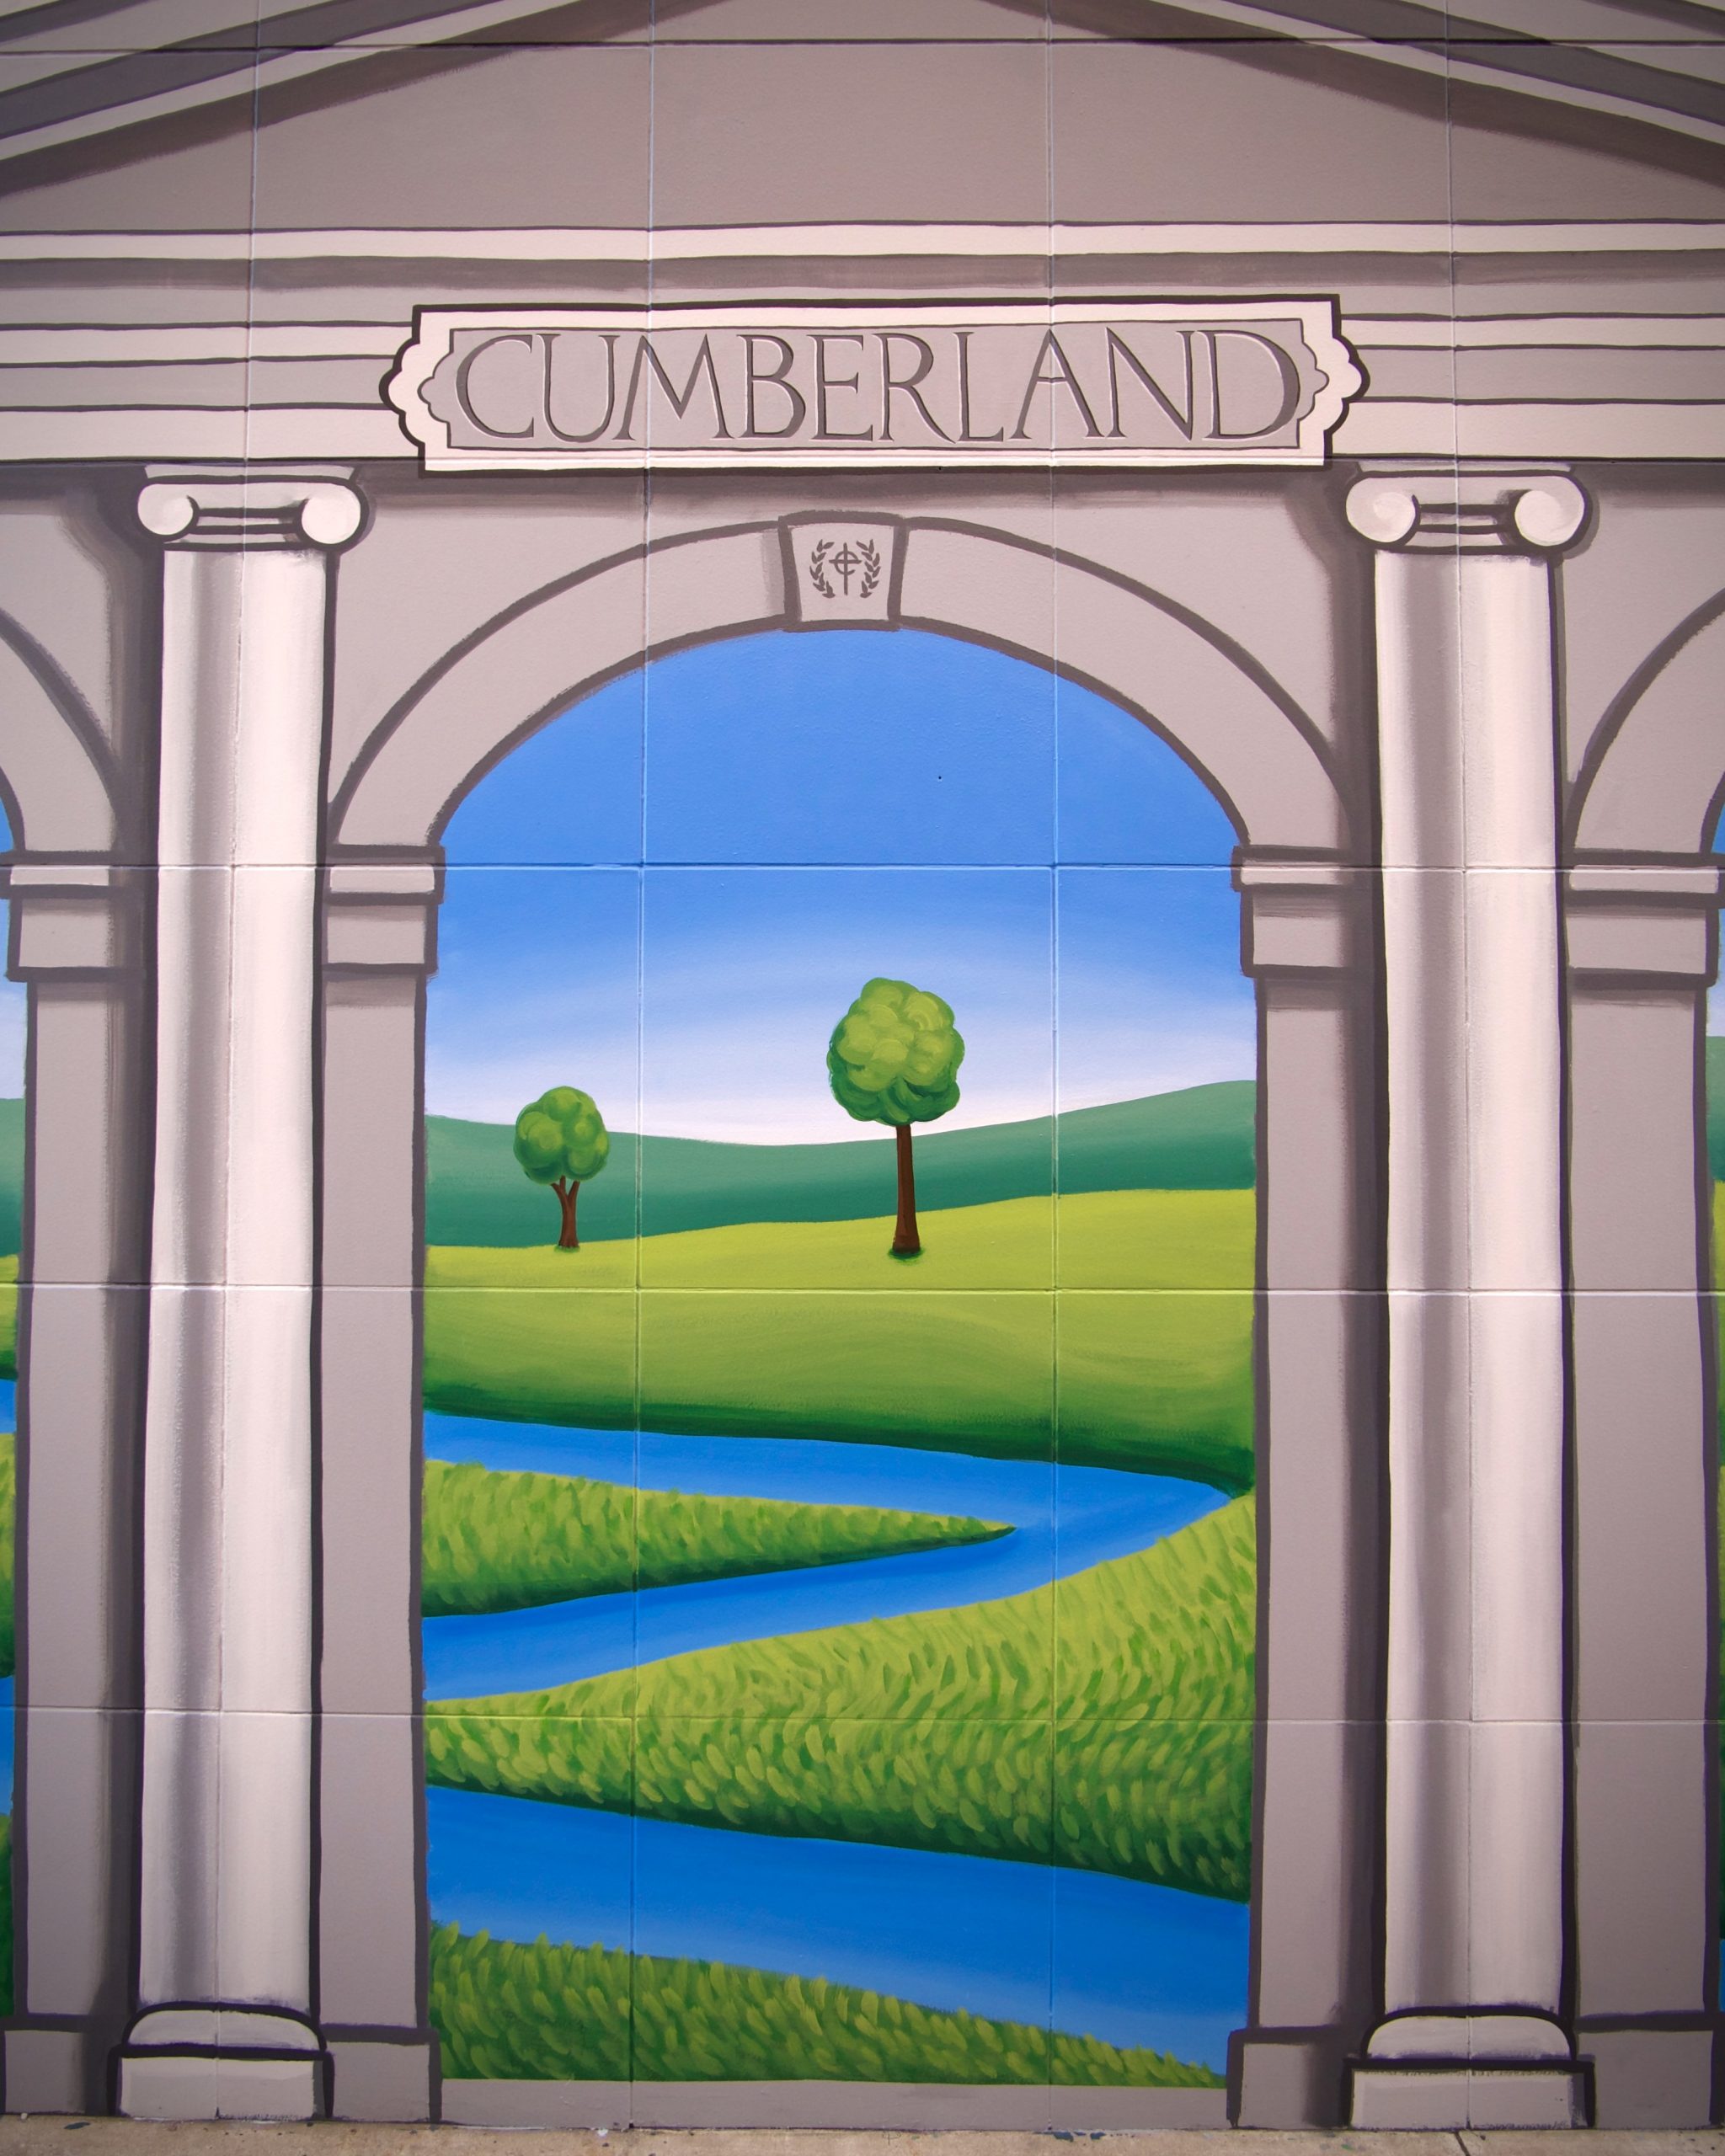 The Cumberland Mural